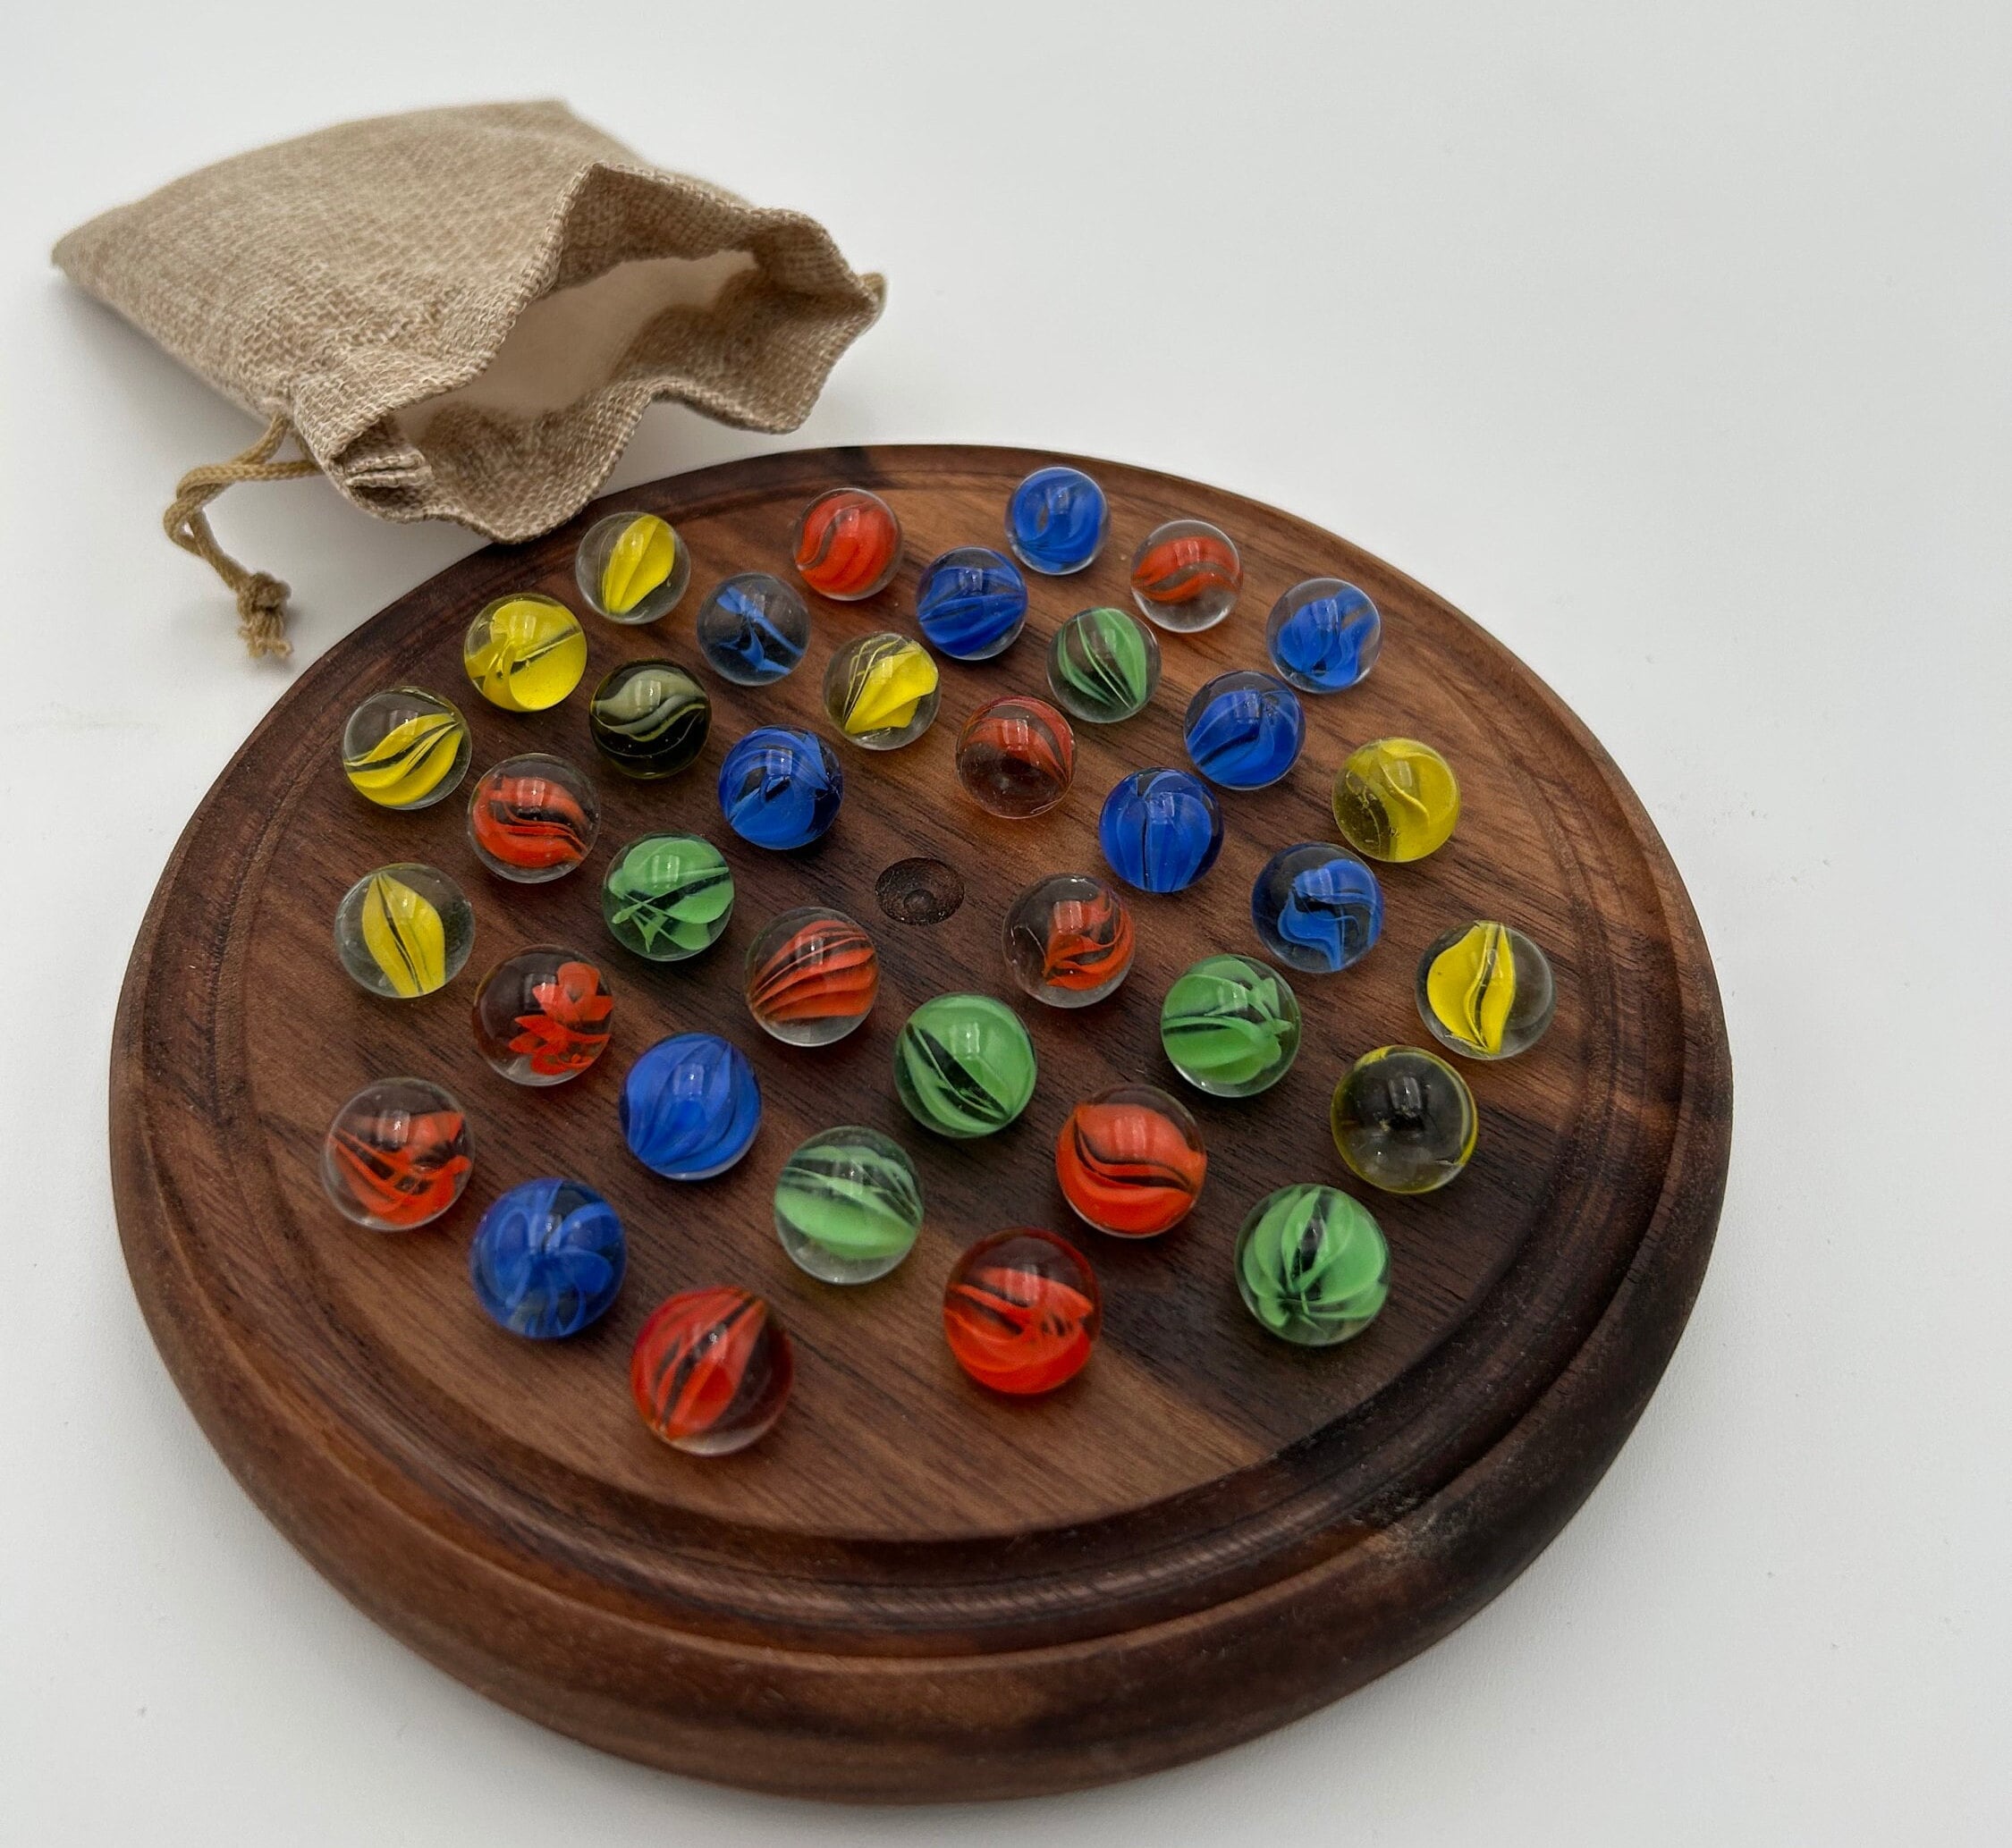 Buy Online Winmaarc Handmade Wooden Peg Solitaire Board Game, Mini Teaser  Board Games -  577693